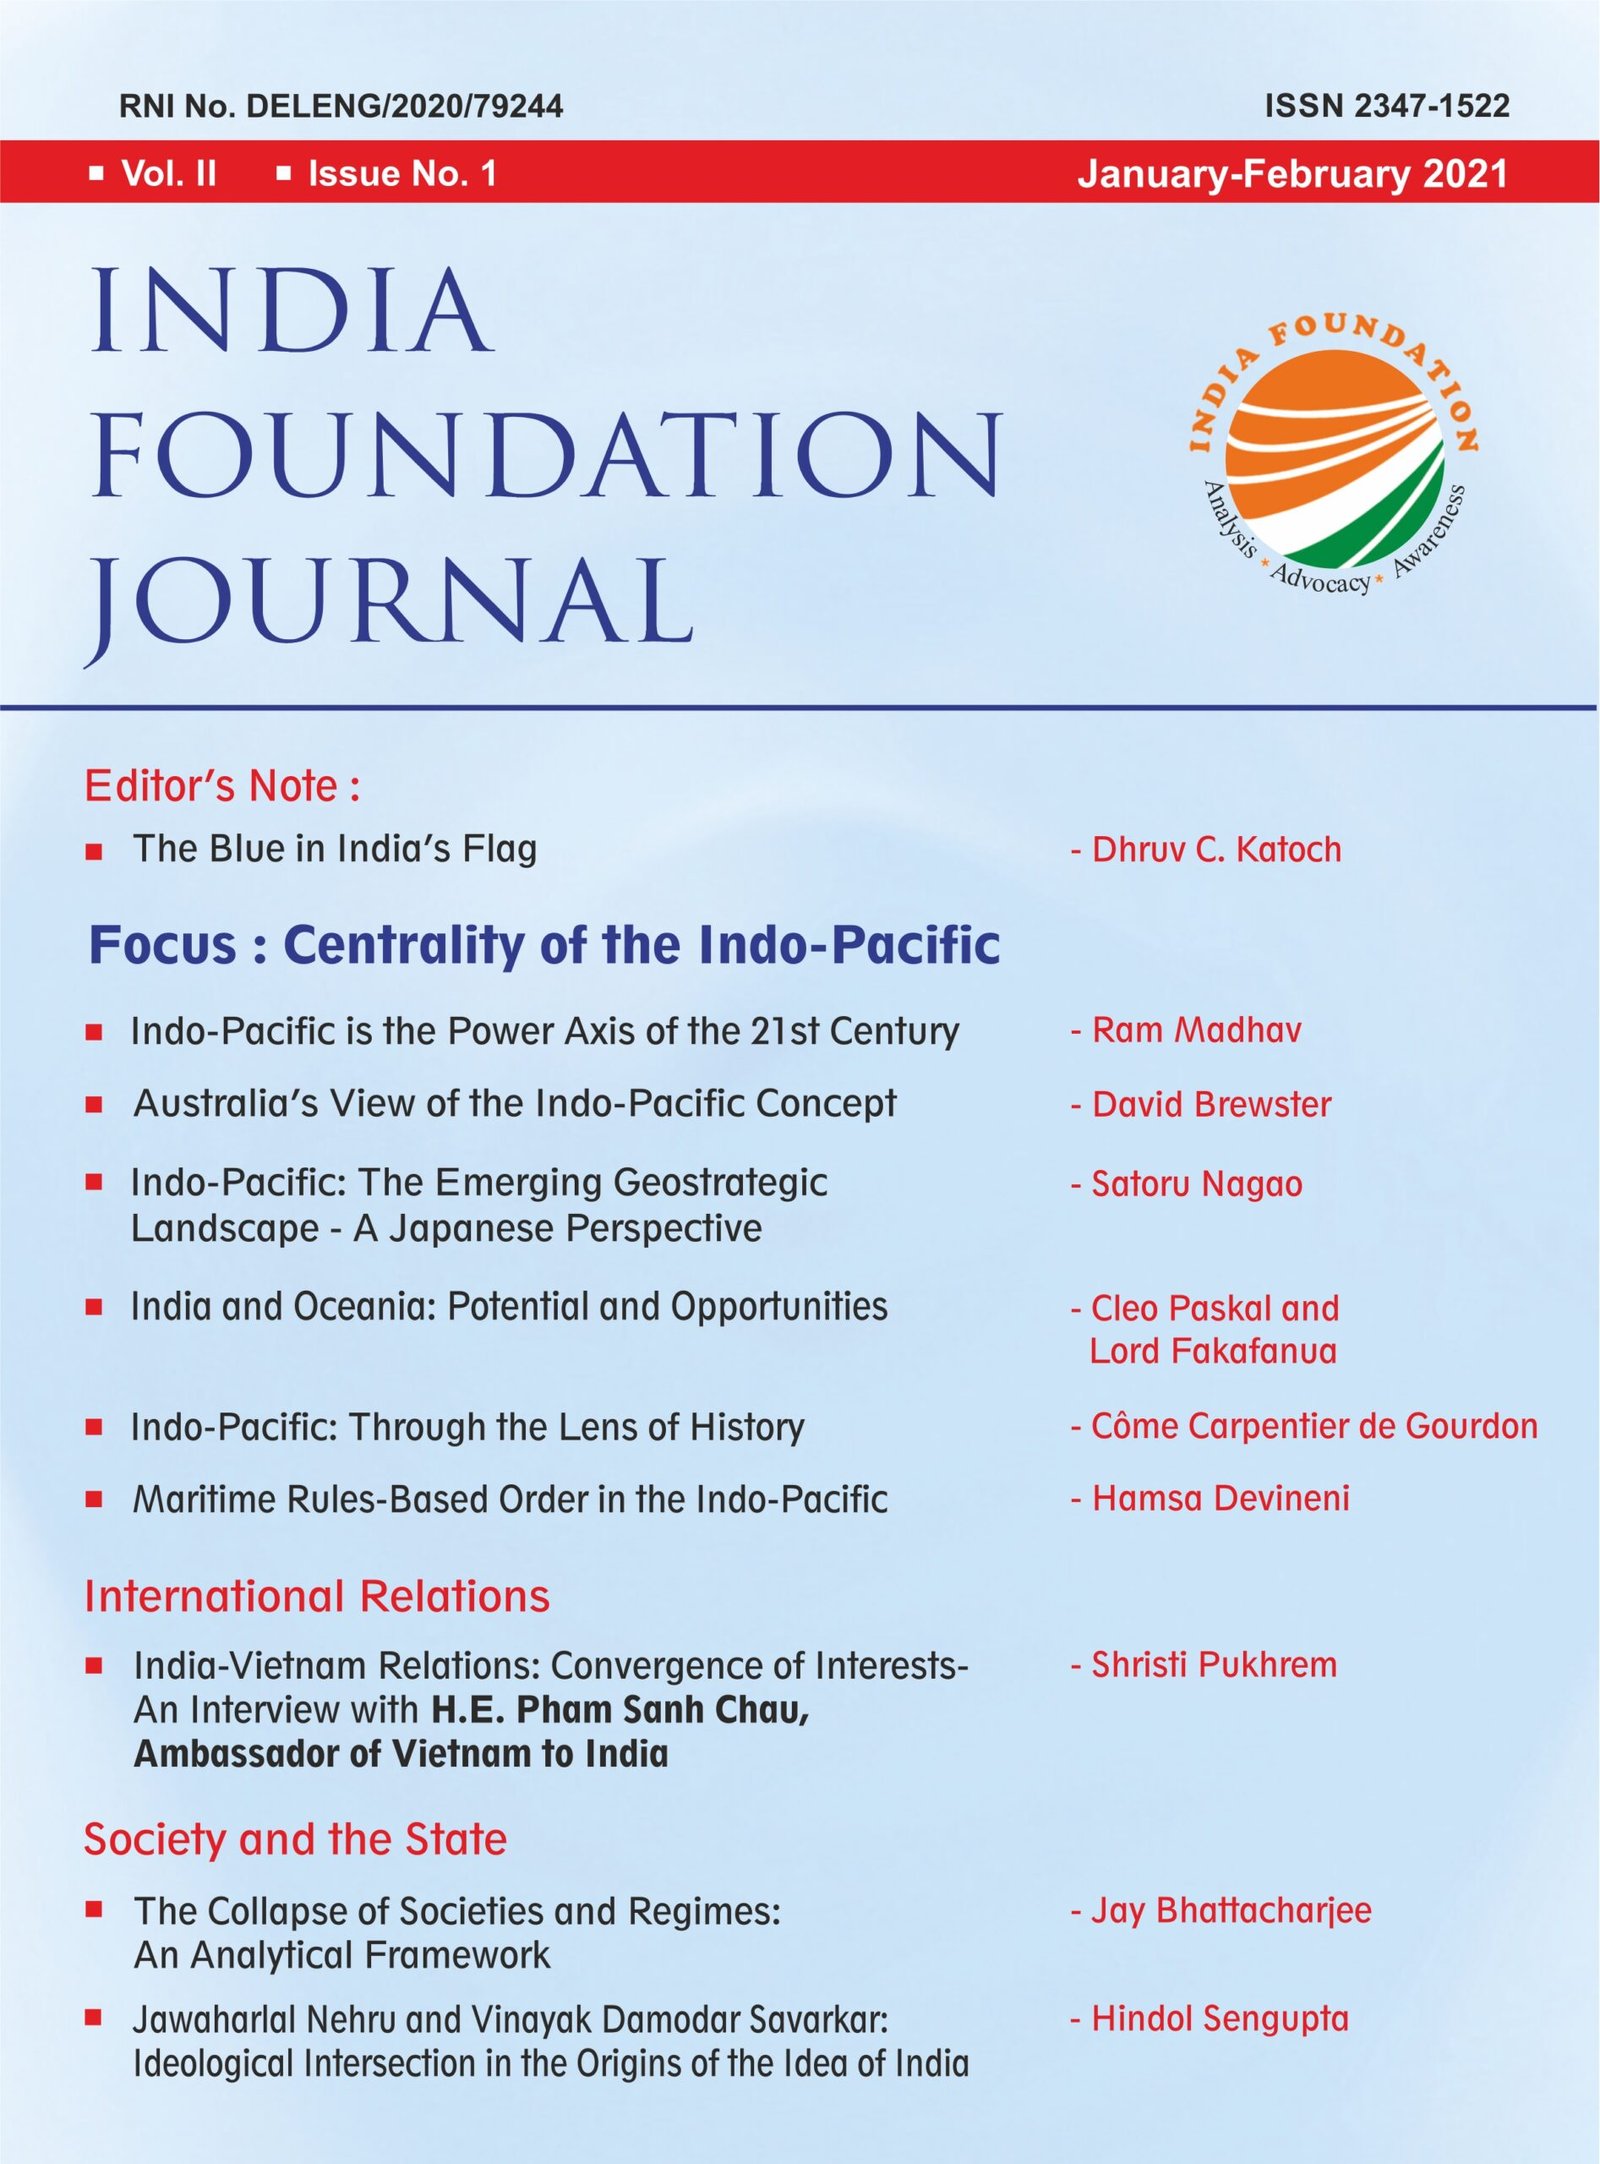 India Foundation Journal January-February 2021